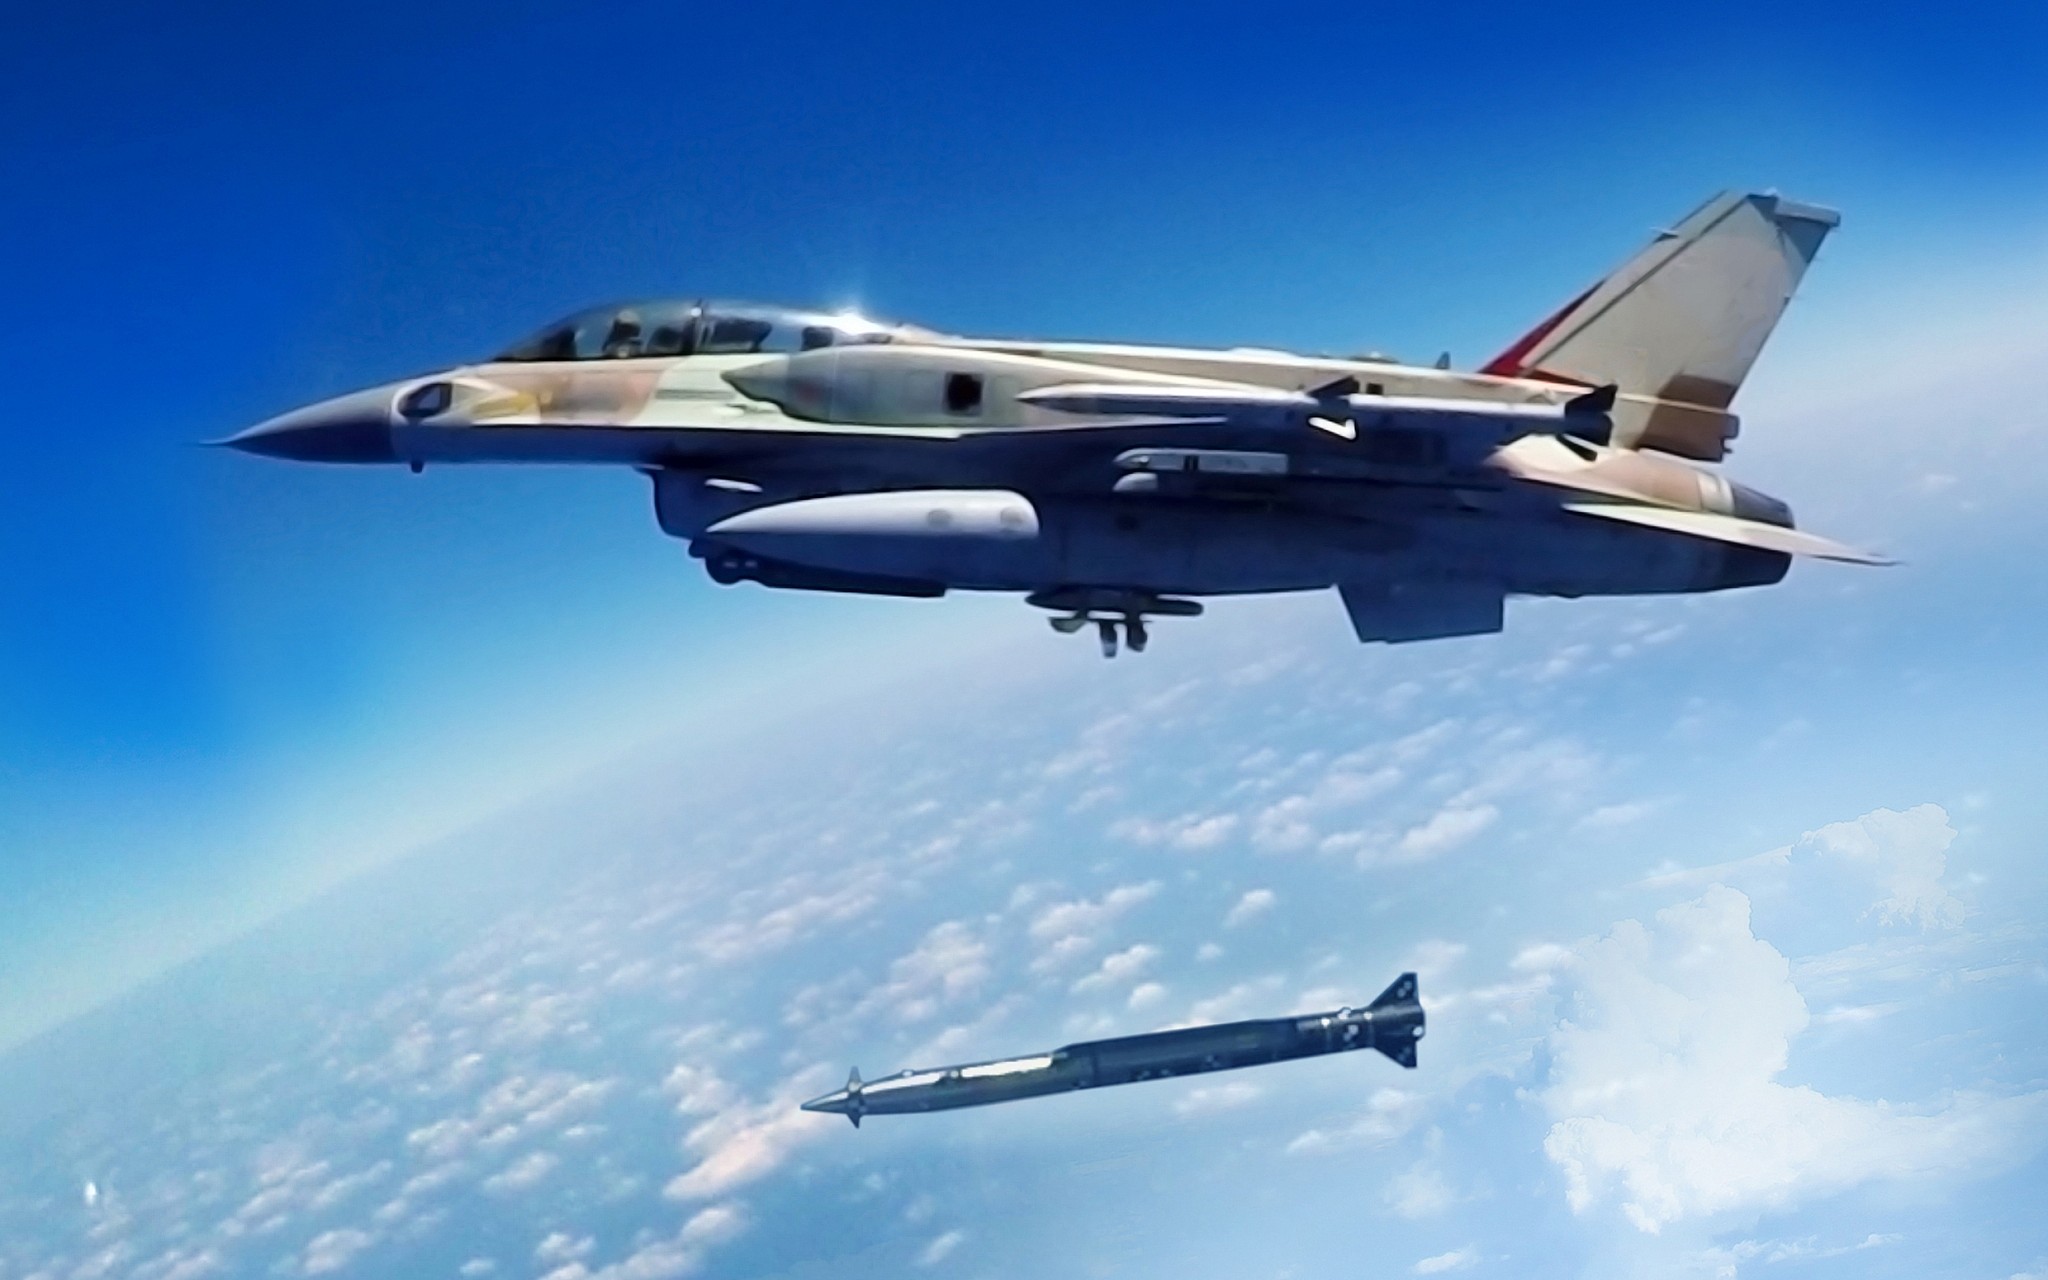 Israeli Air Force Struck Syriaâs Masyaf With New Supersonic, Precision-Guided Missiles: Expert